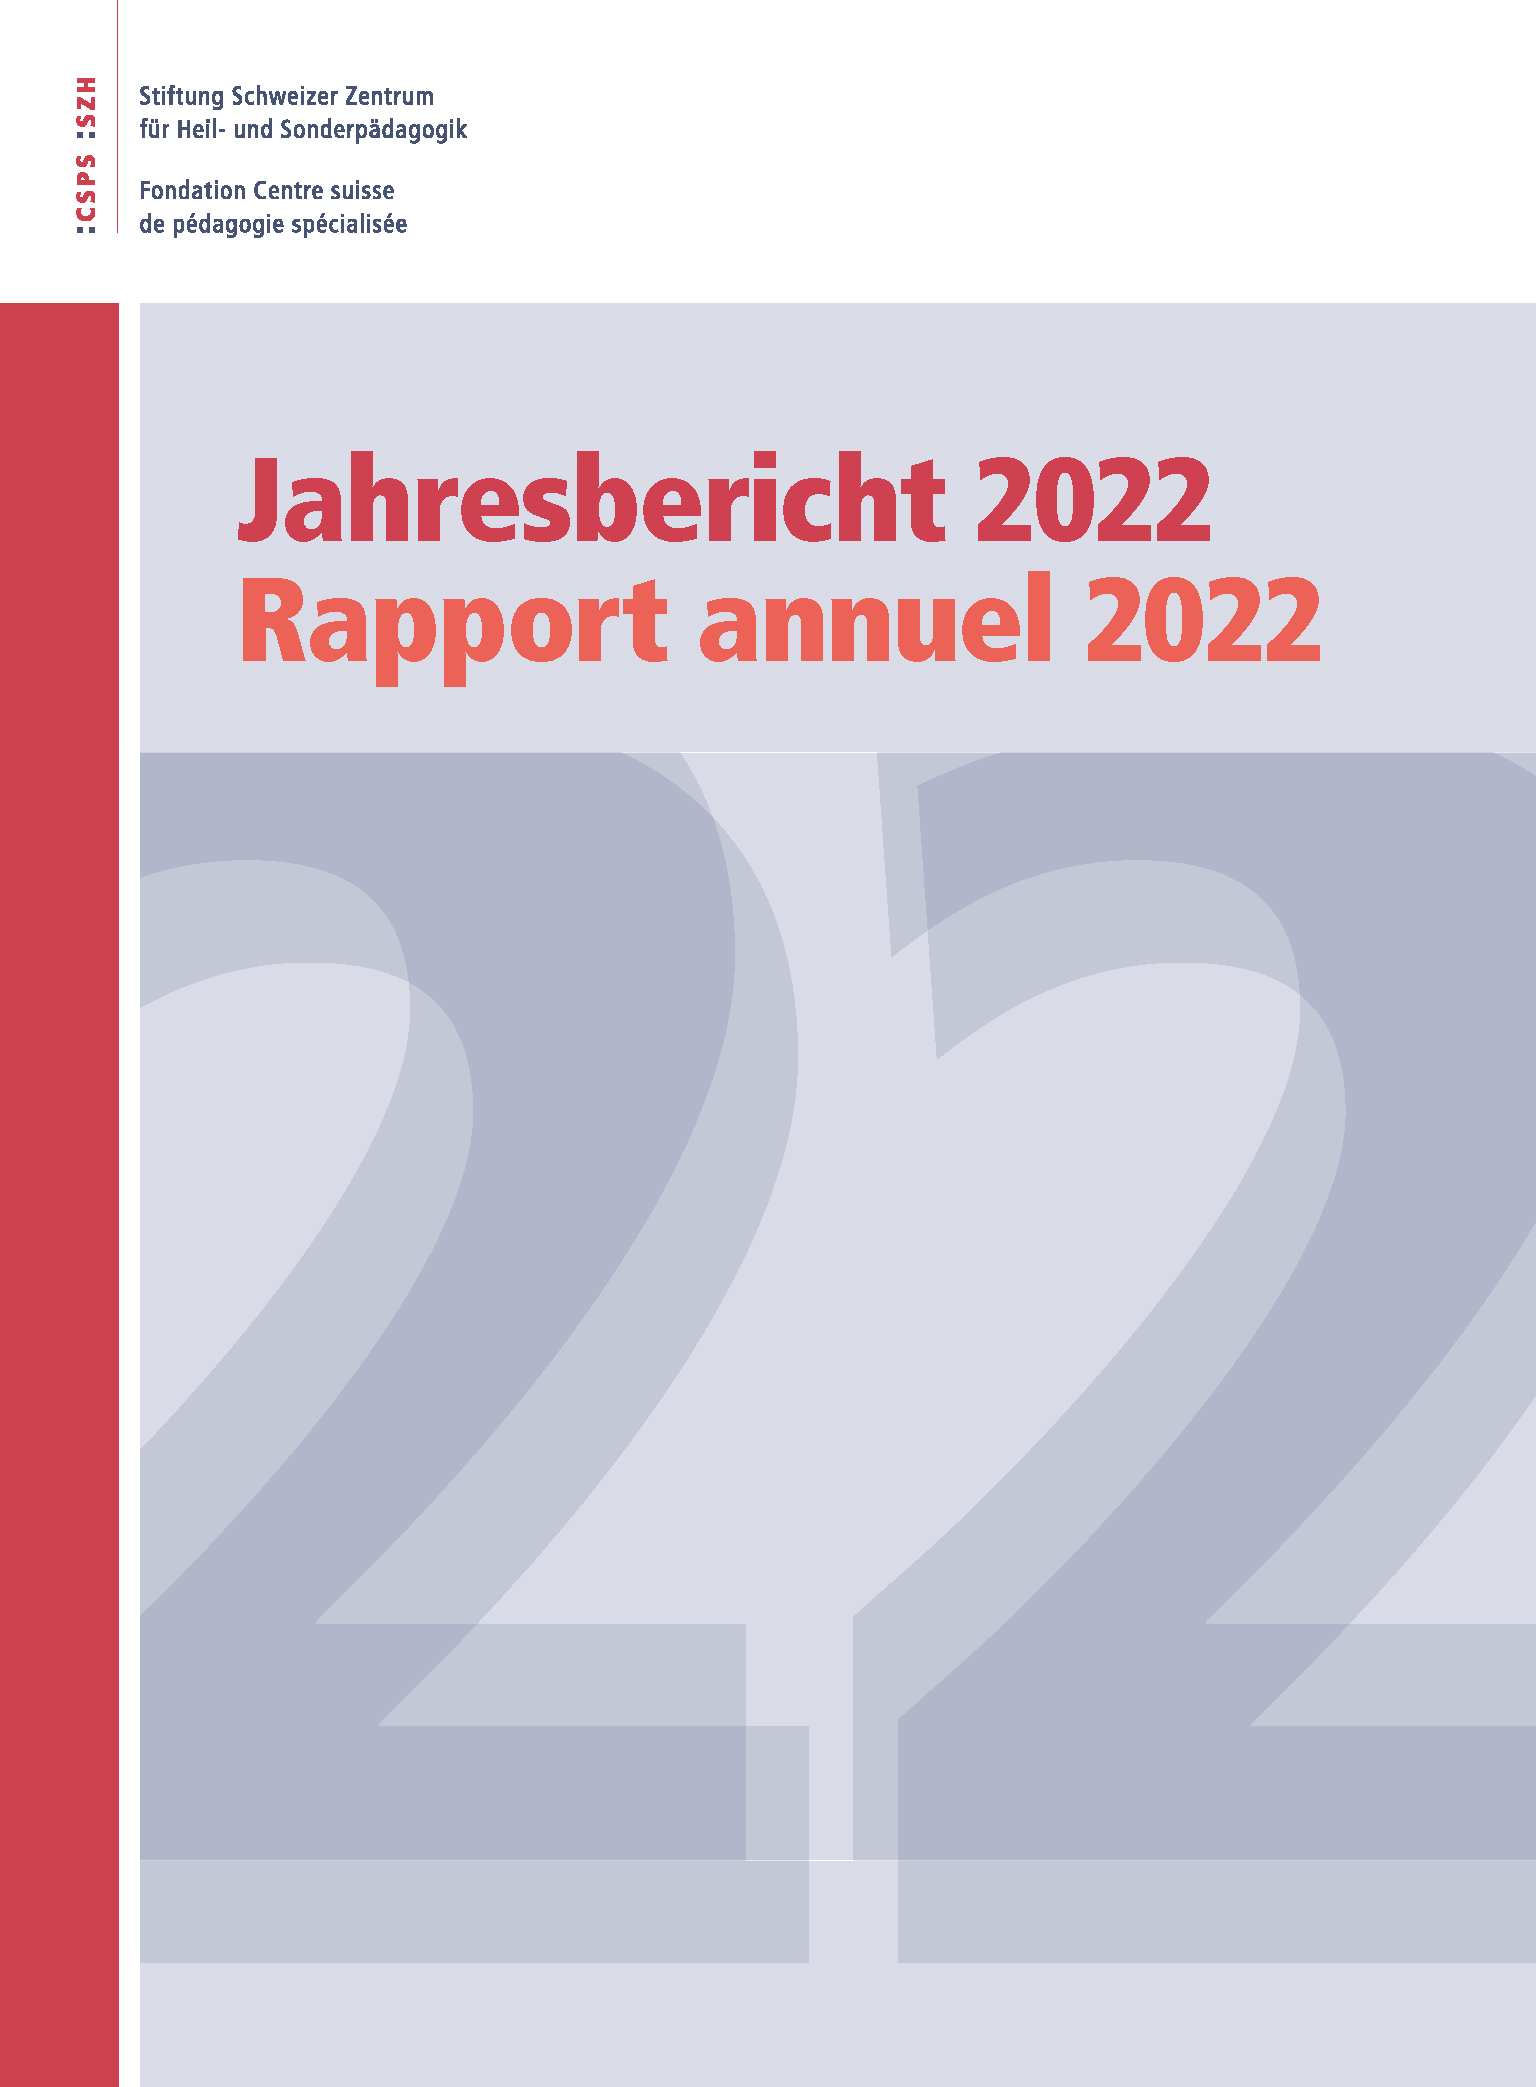  Rapport annuel CSPS 2022 